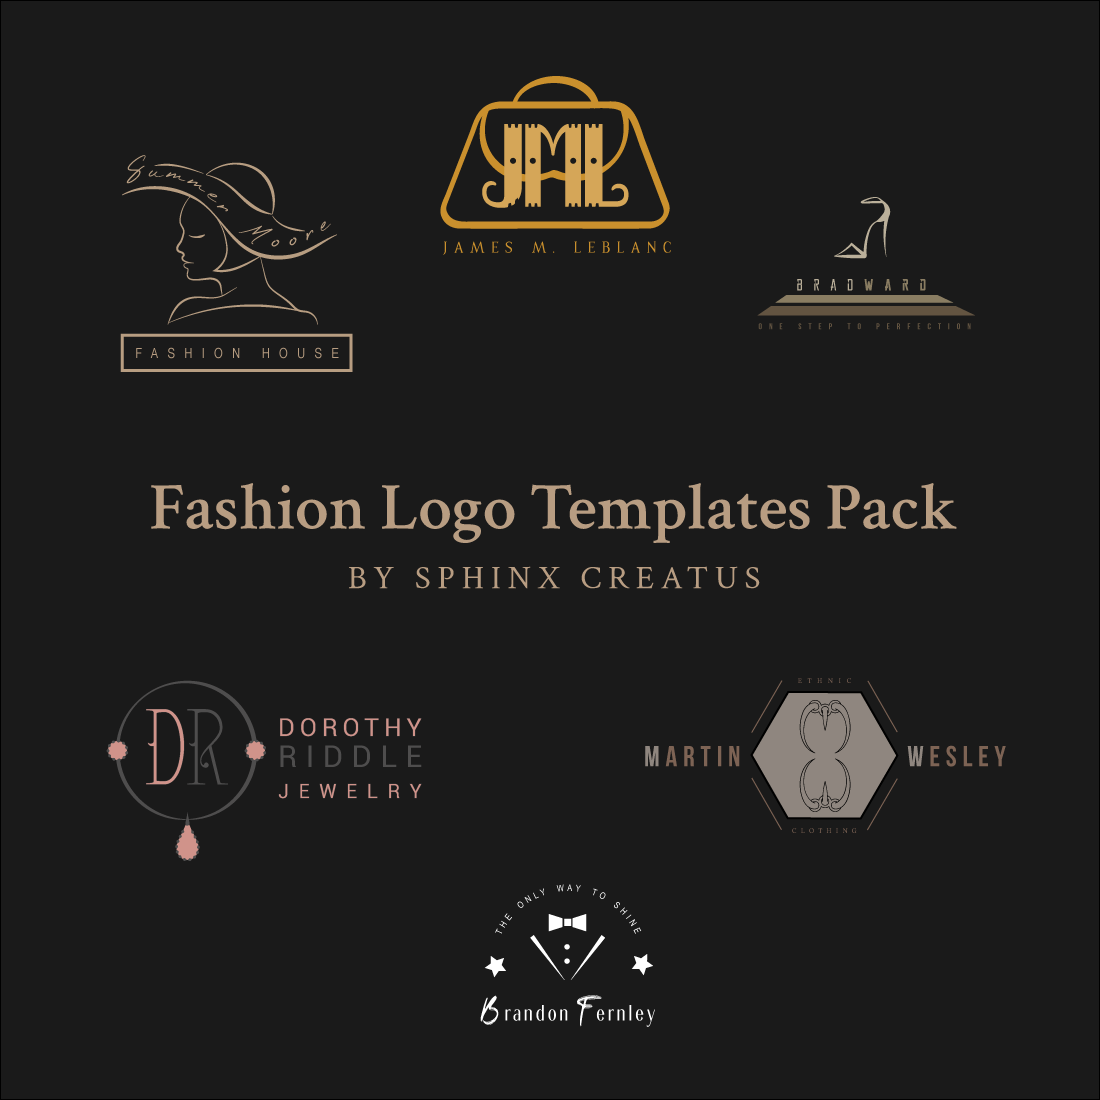 Fashion Logo Templates Pack previews.